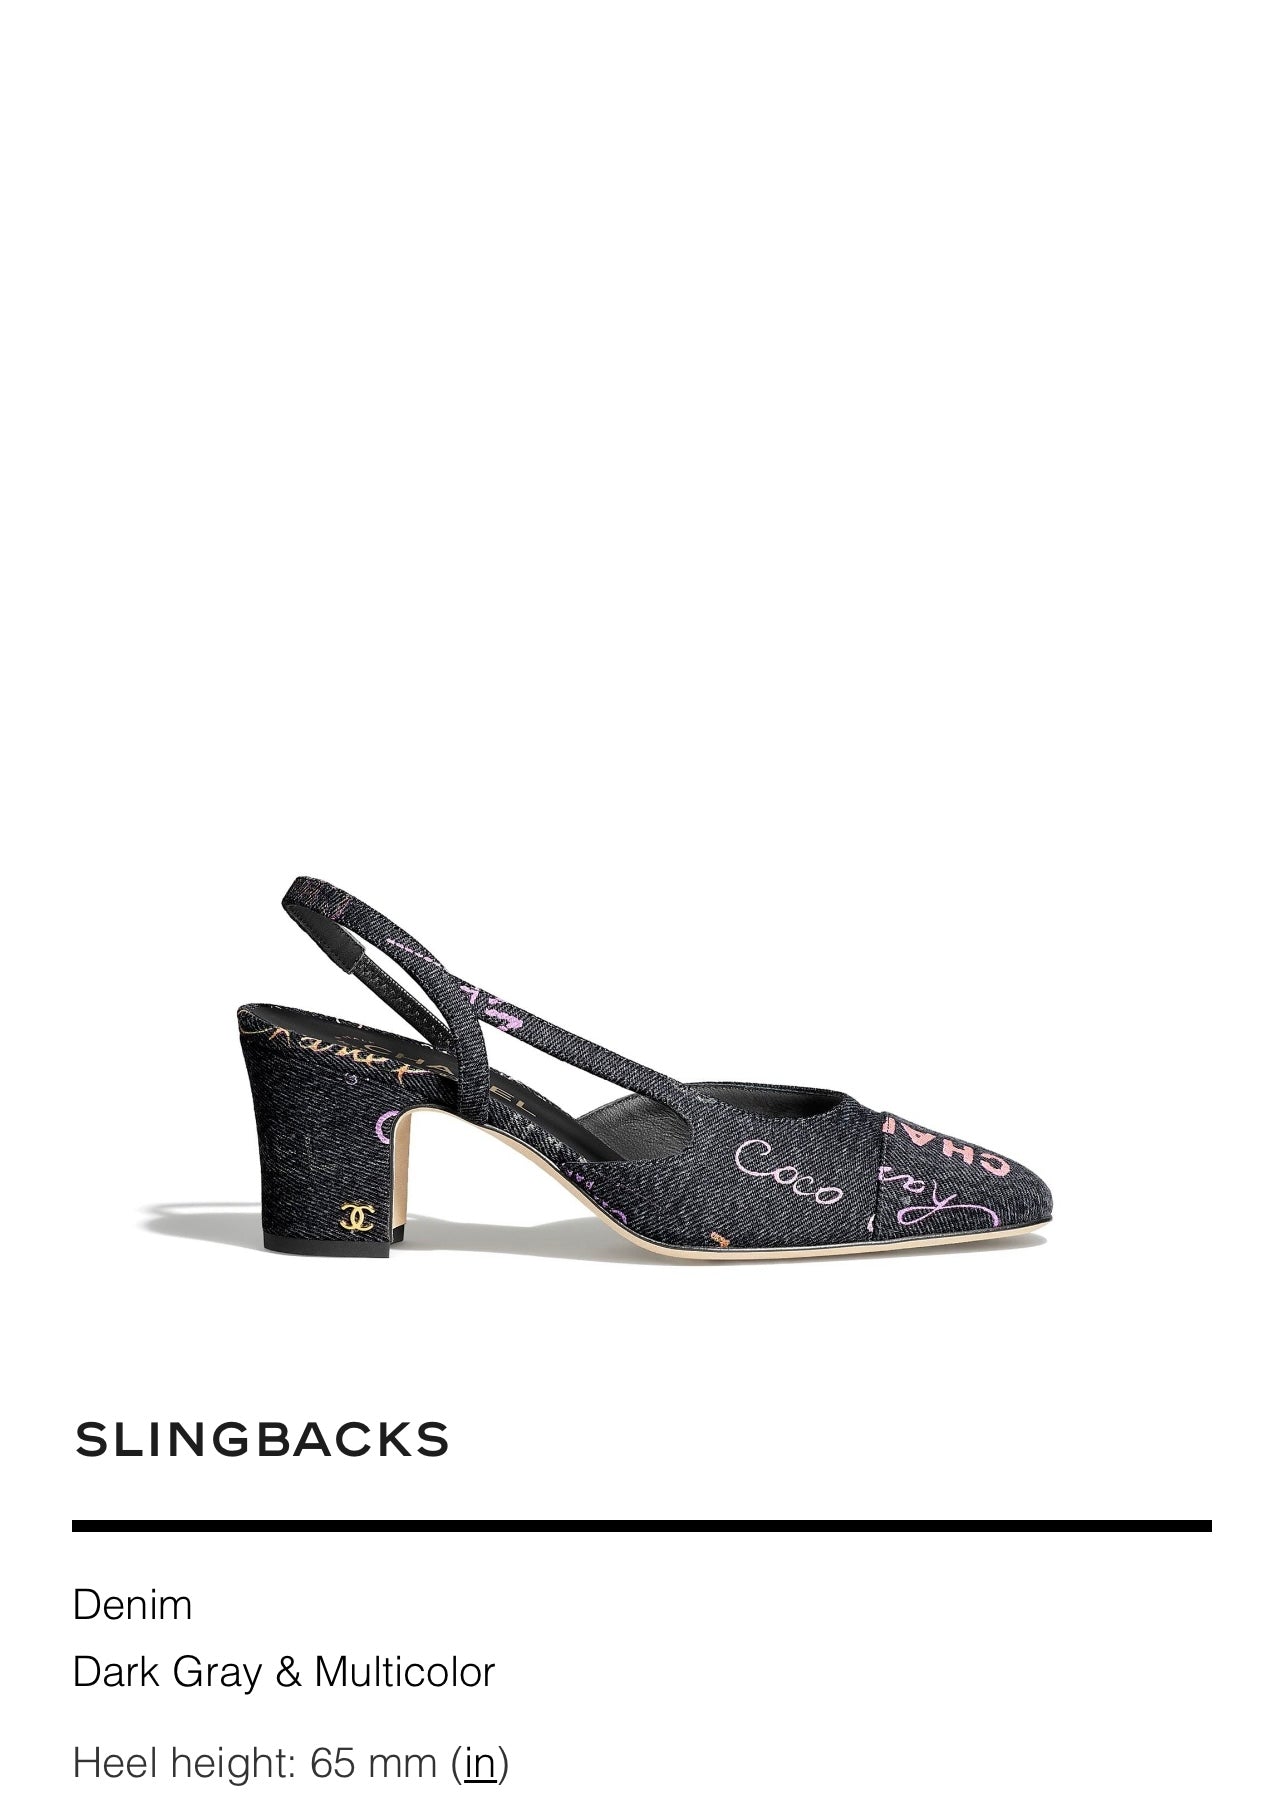 CHANEL, Shoes, Chanel Interlocking Cc Logo Slingback Sandals